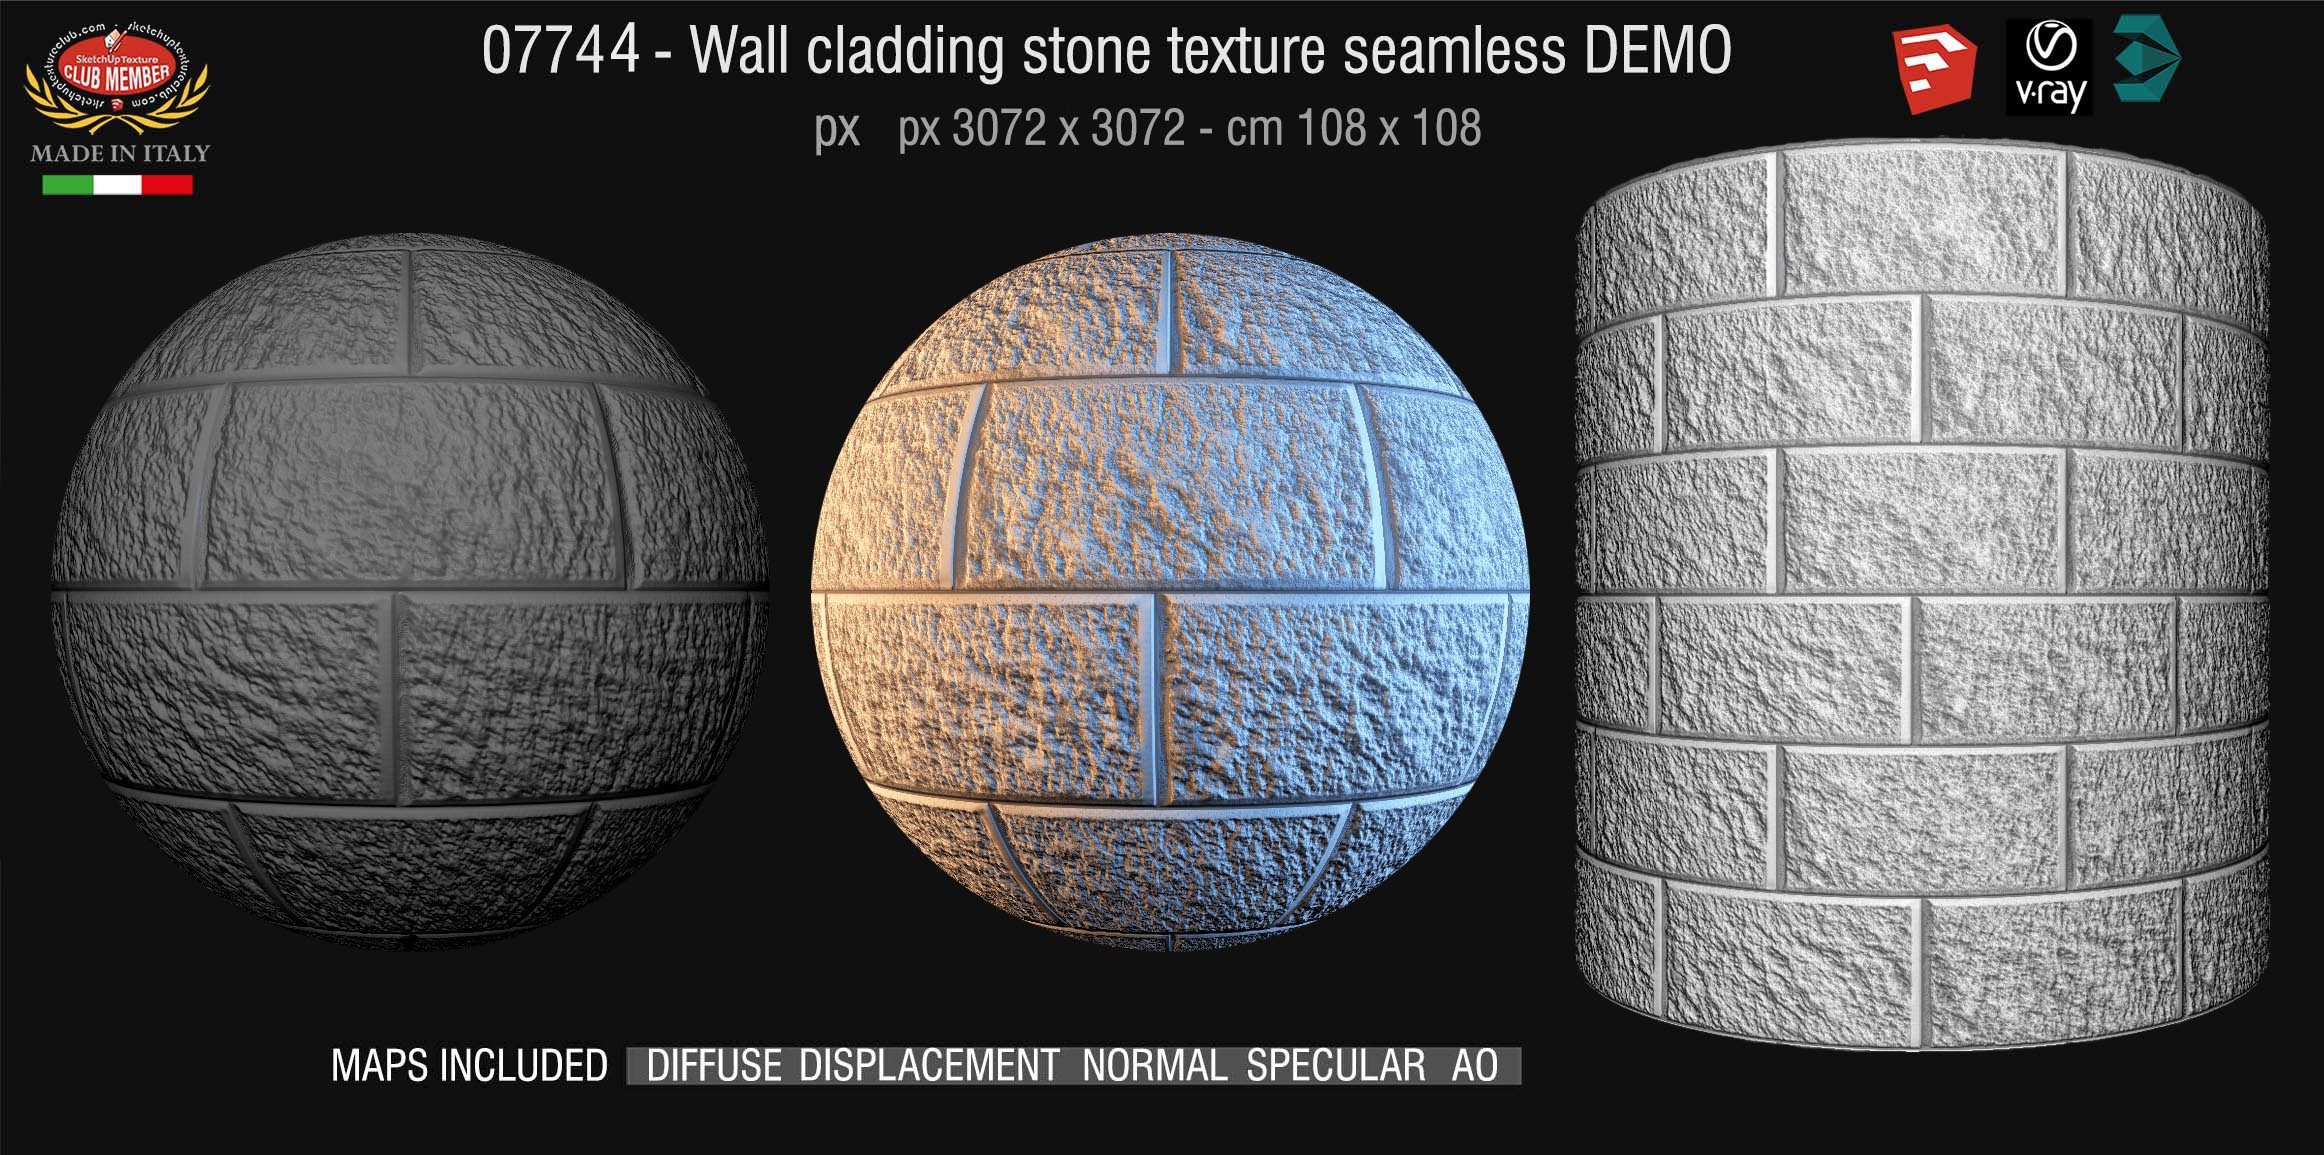 07744/7 Wall cladding stone texture pbr seamless